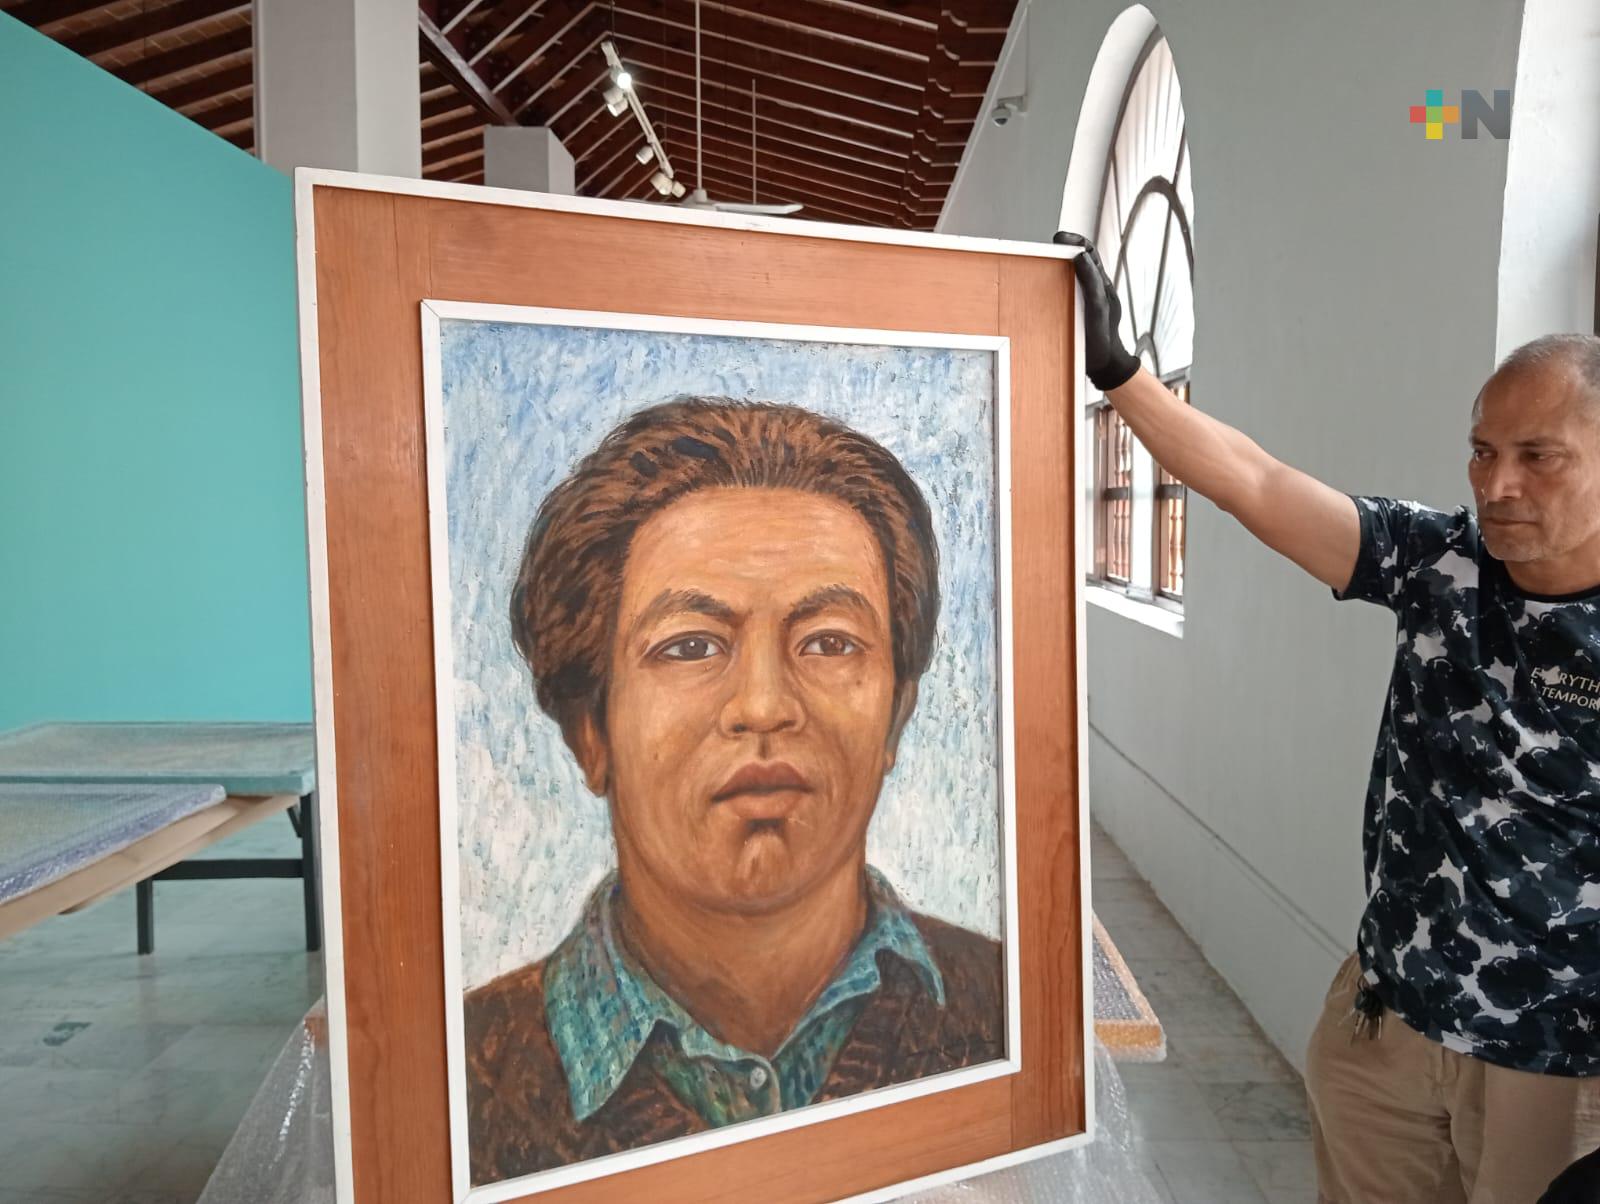 Exposición pictórica en Veracruz puerto gracias a coordinación cultural con Tlaxcala